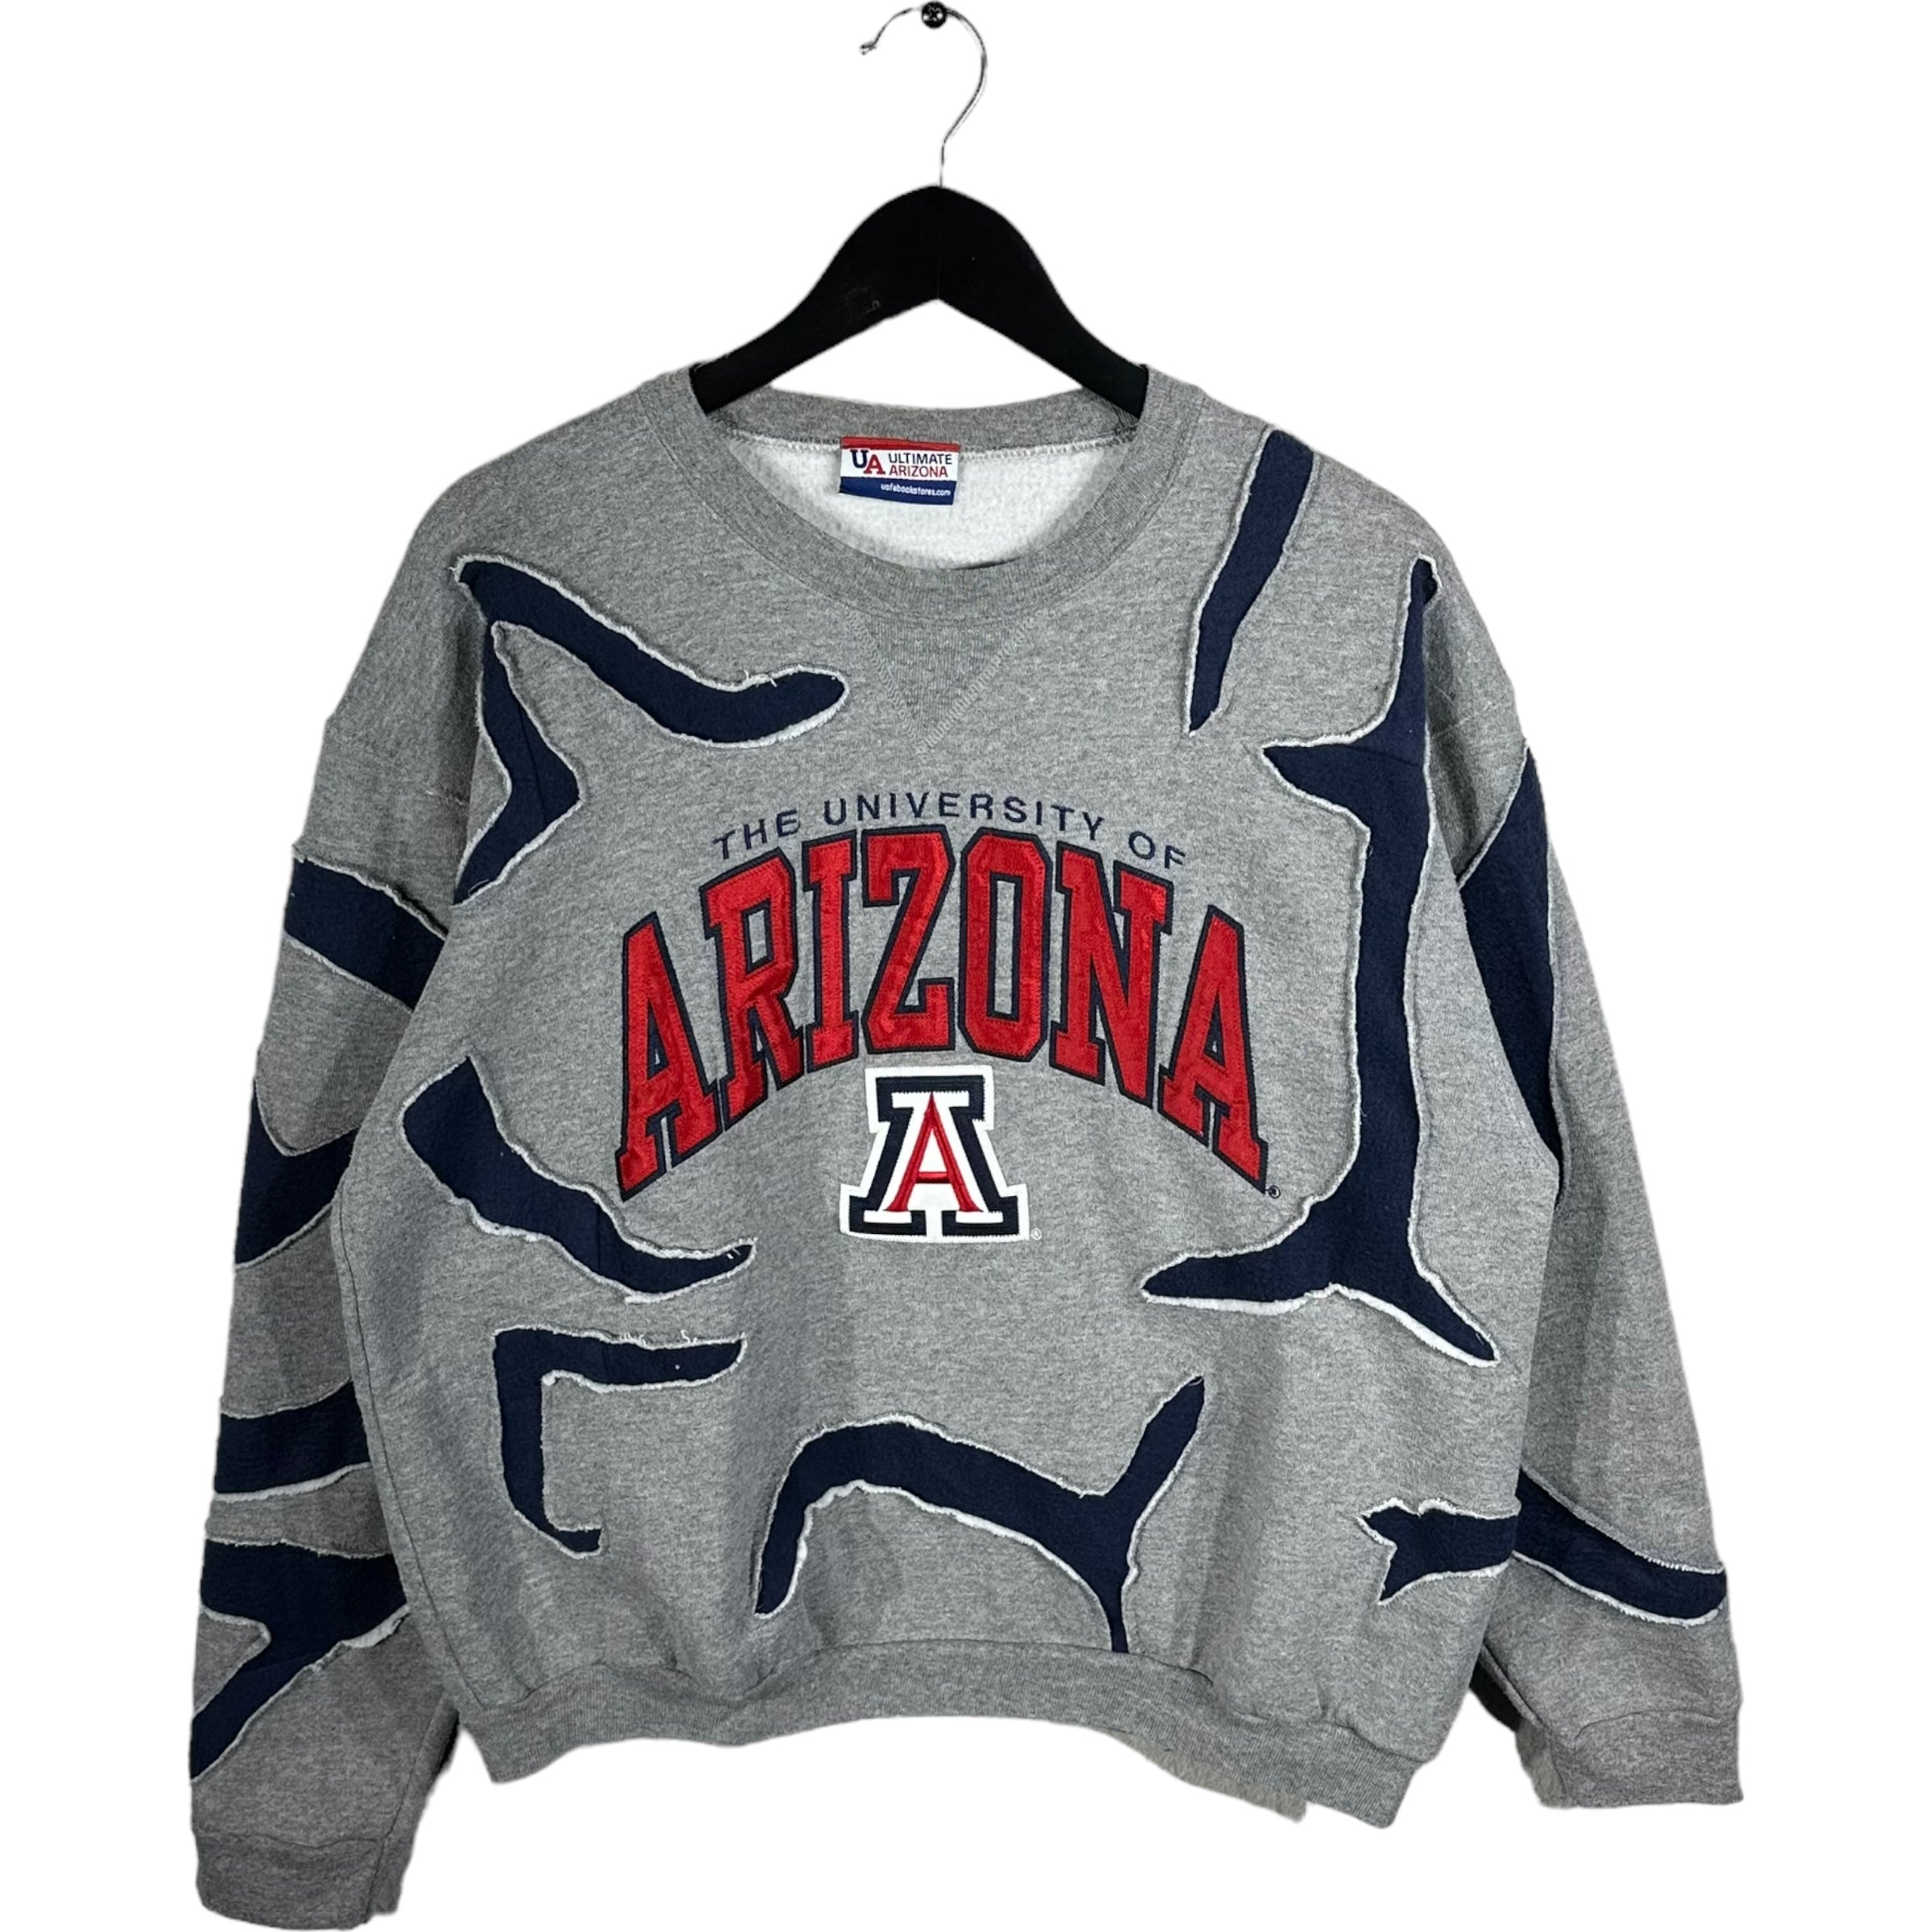 Vintage The University Of Arizona Cut & Sew Crewneck